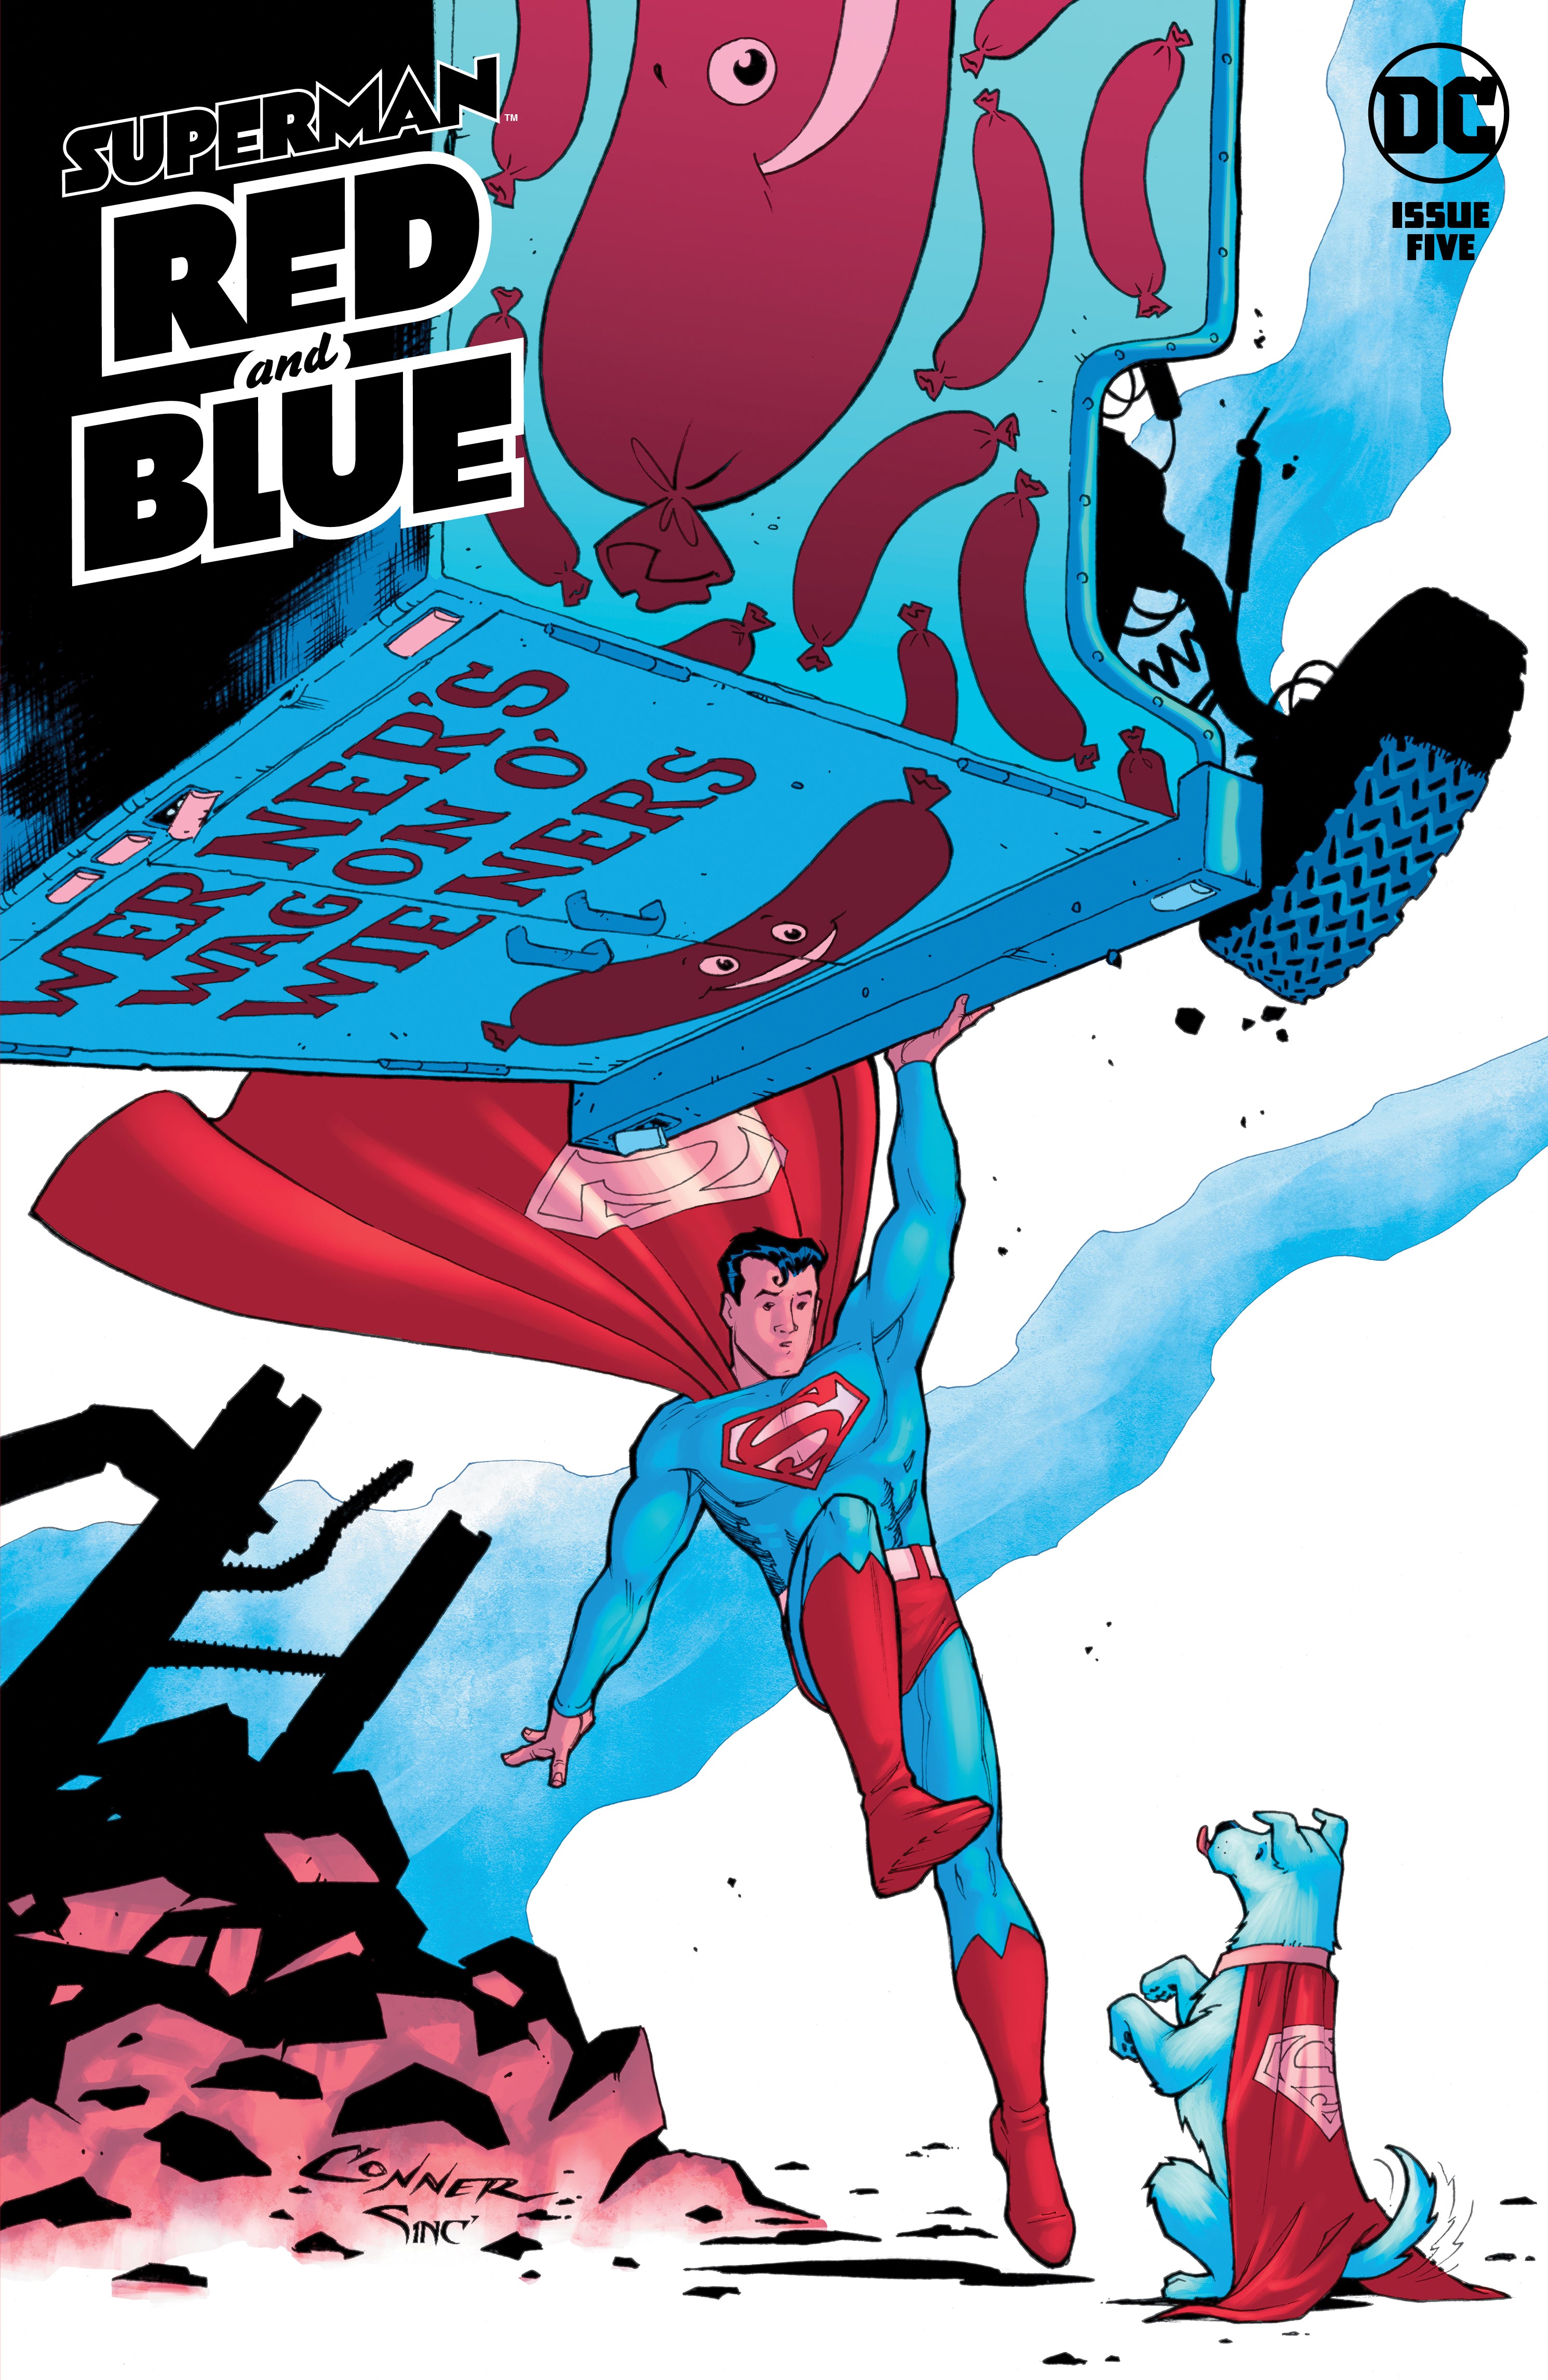 SUPERMAN RED & BLUE #5 (OF 6) CVR A AMANDA CONNER